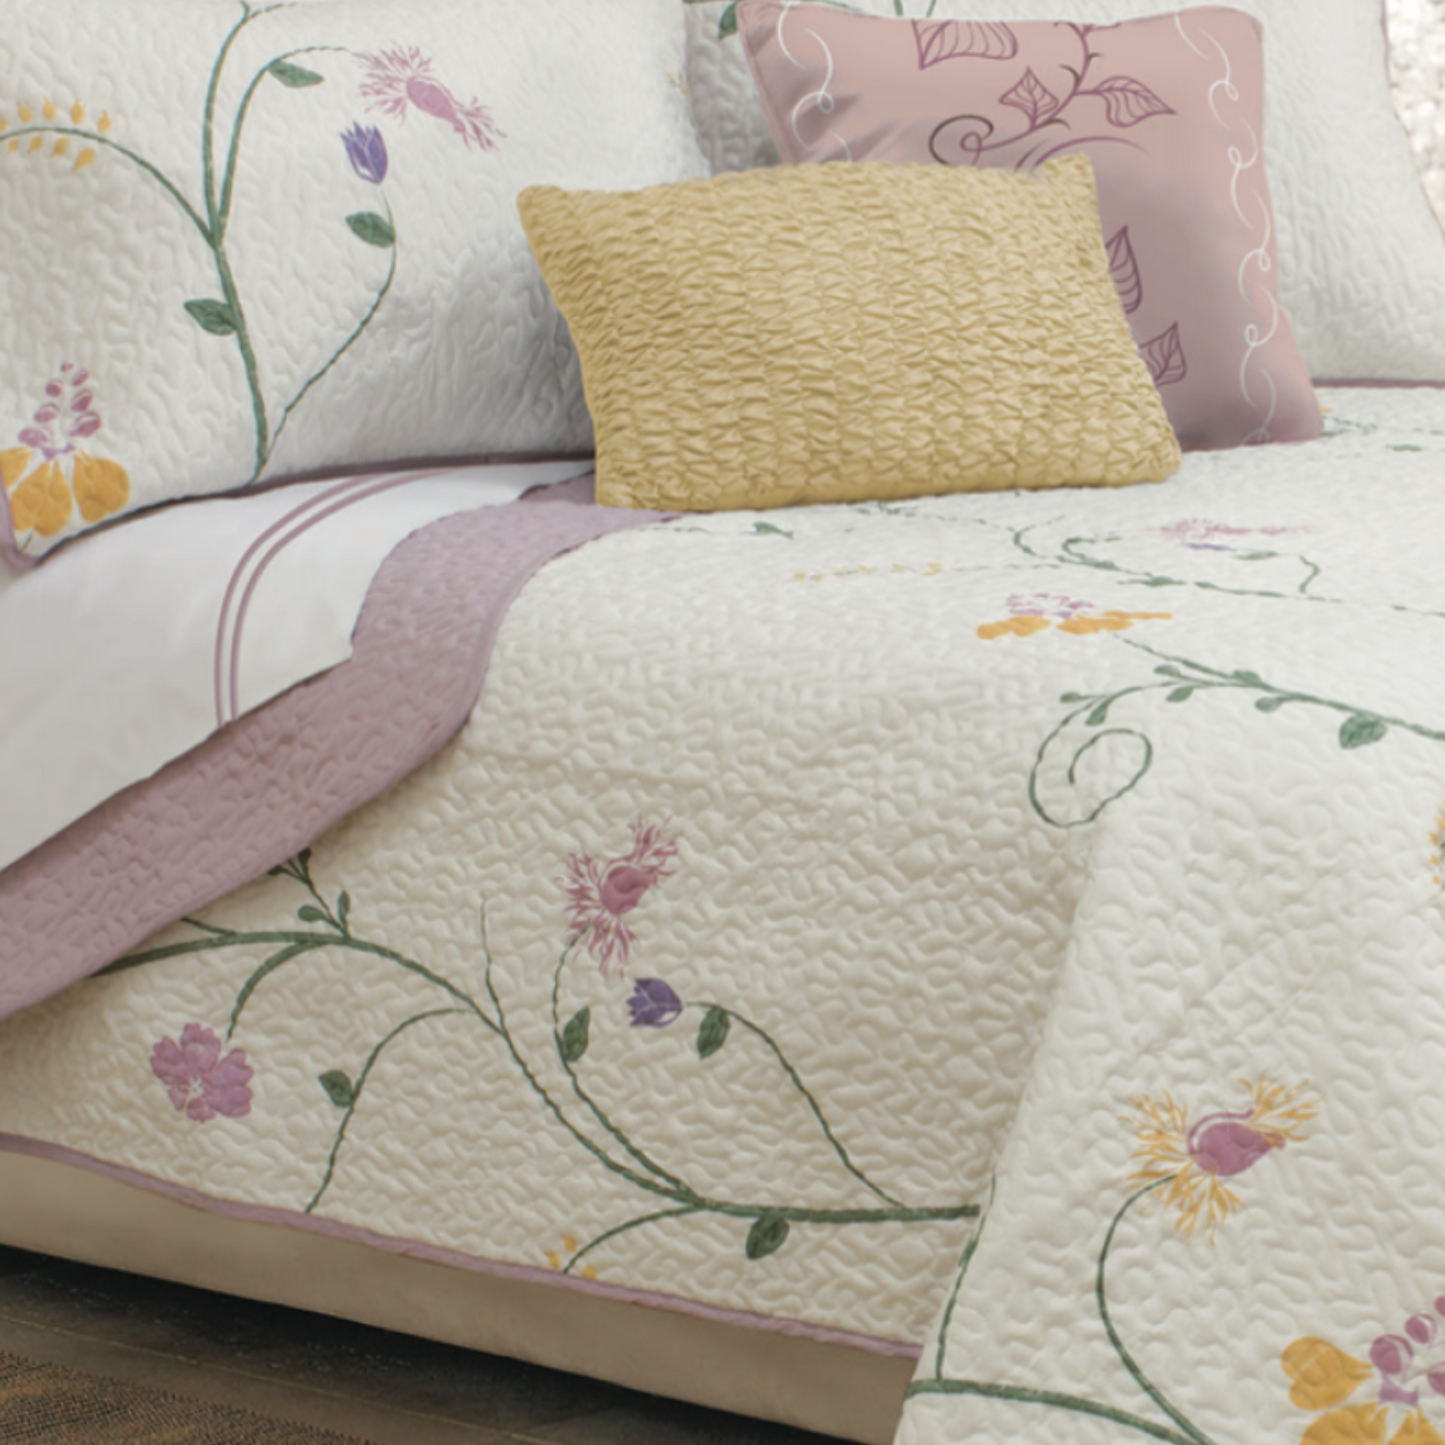 Pink & Yellow Floral 3 Piece Bedding Quilt Set